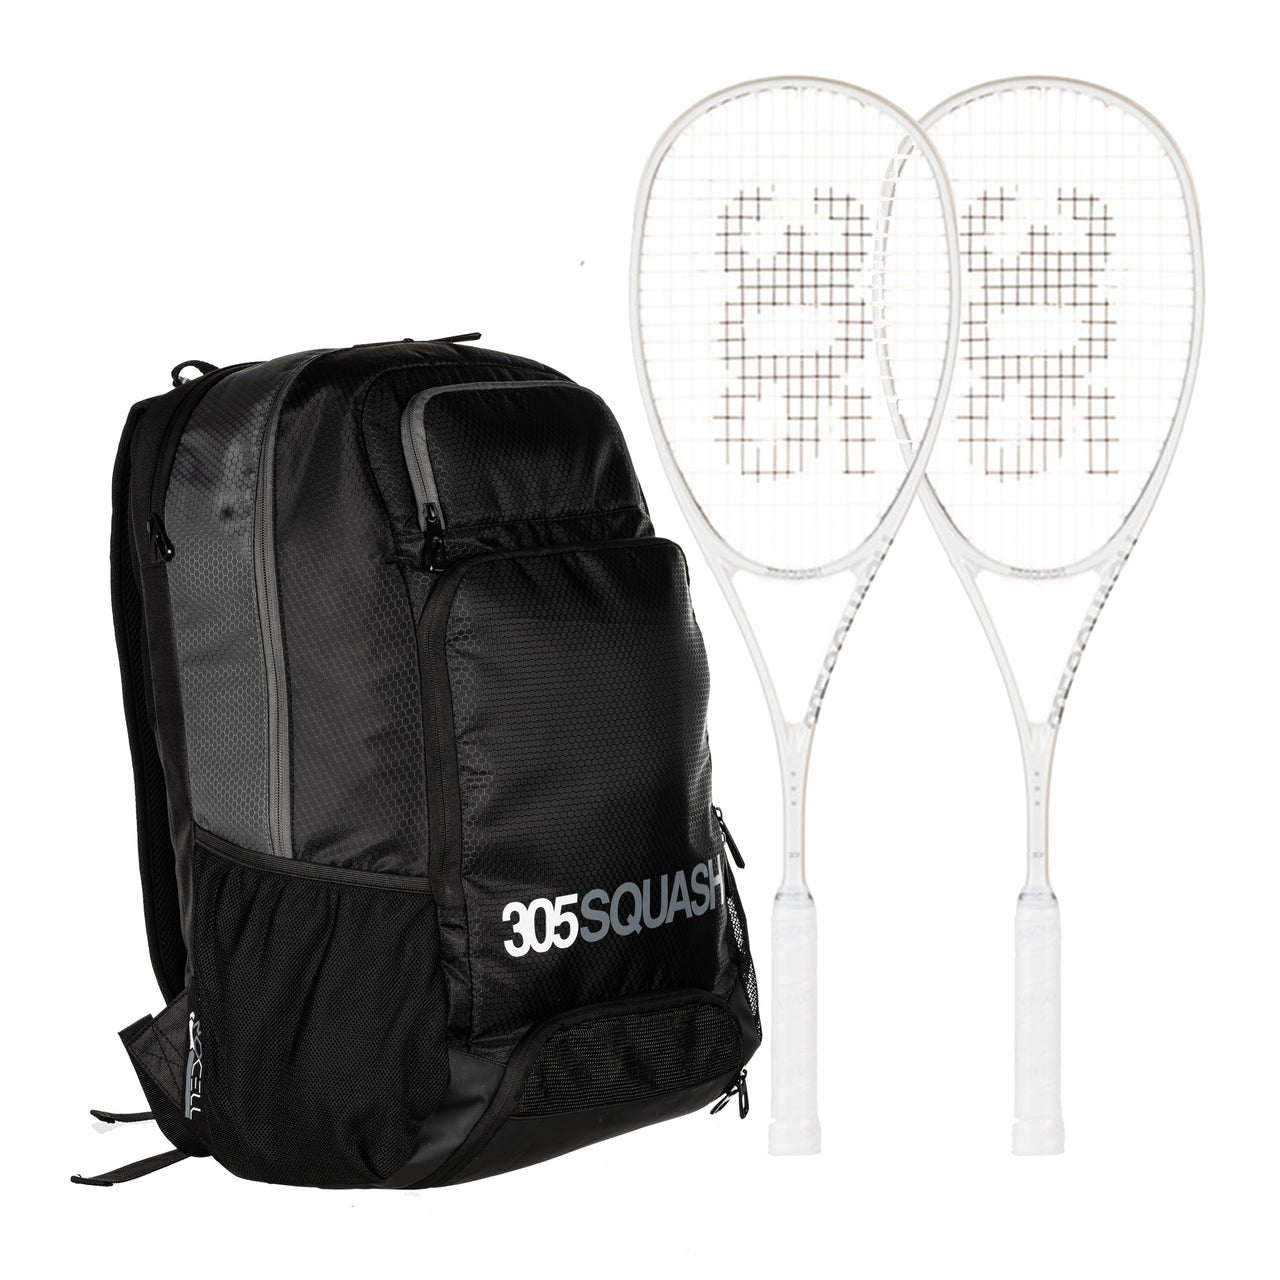 305SQUASH ProCell™ XR120 Squash Racket + ProCell™ BackpackXL - 2 RACKET + BACKPACK BUNDLE